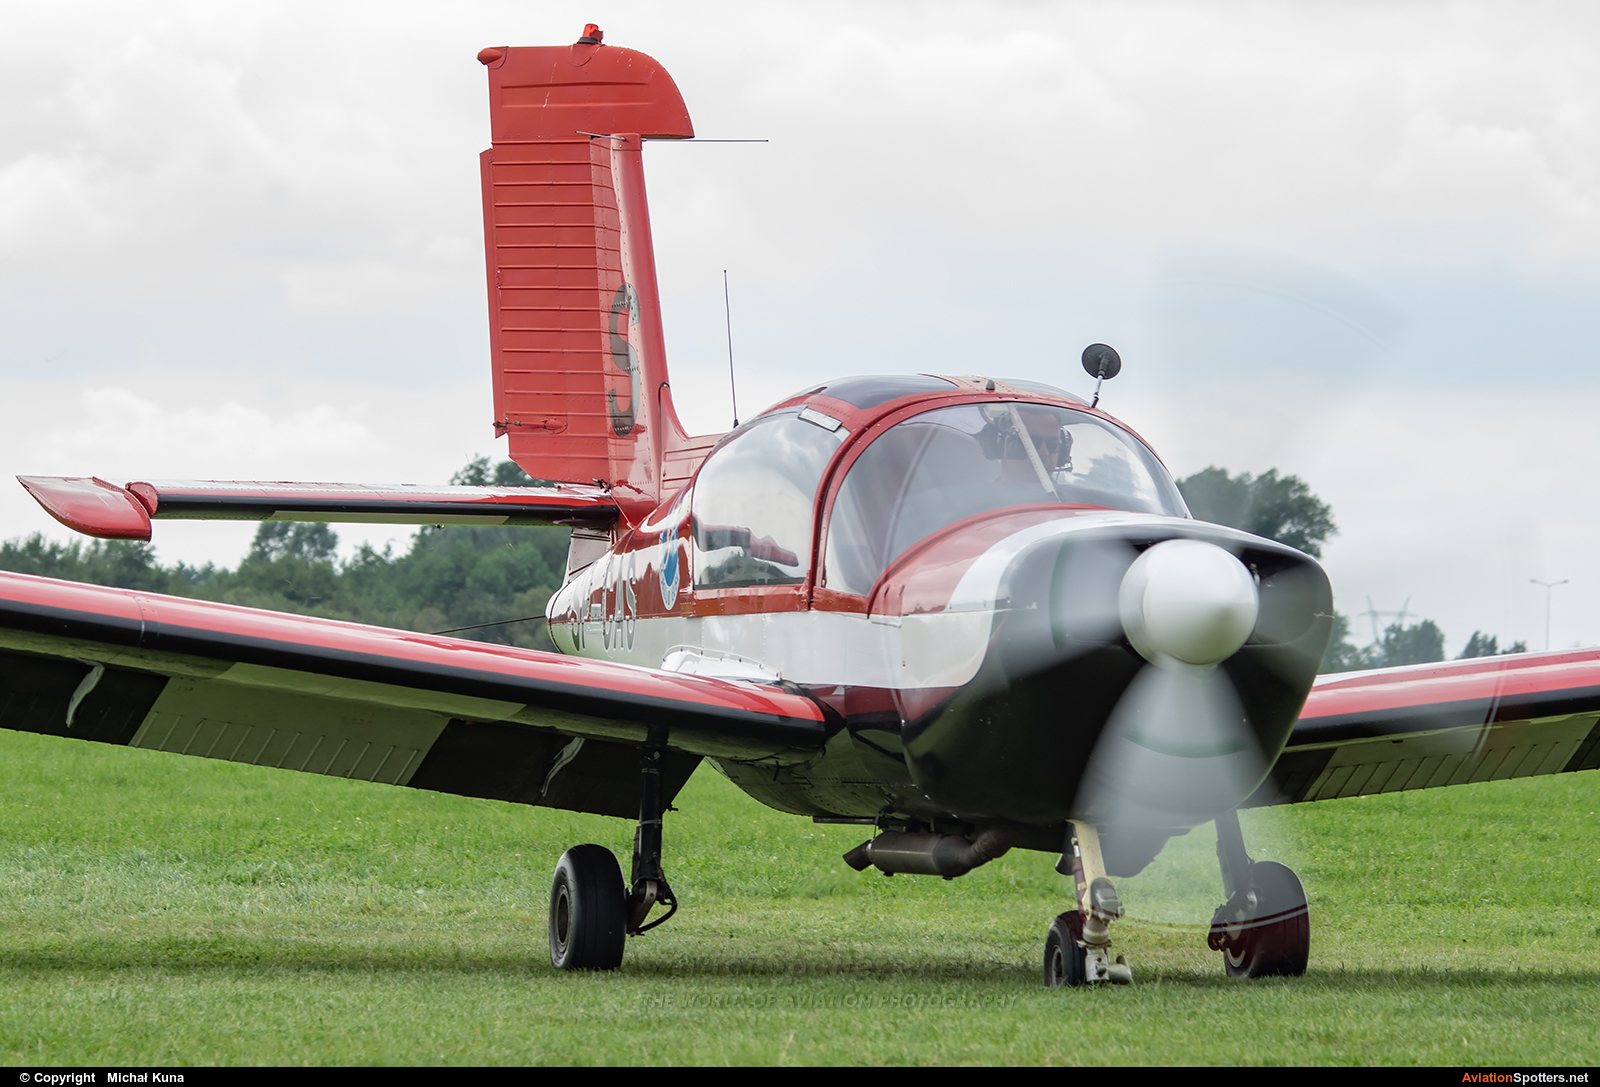 Private  -  172 Skyhawk (all models except RG)  (SP-TZI) By Michał Kuna (big)